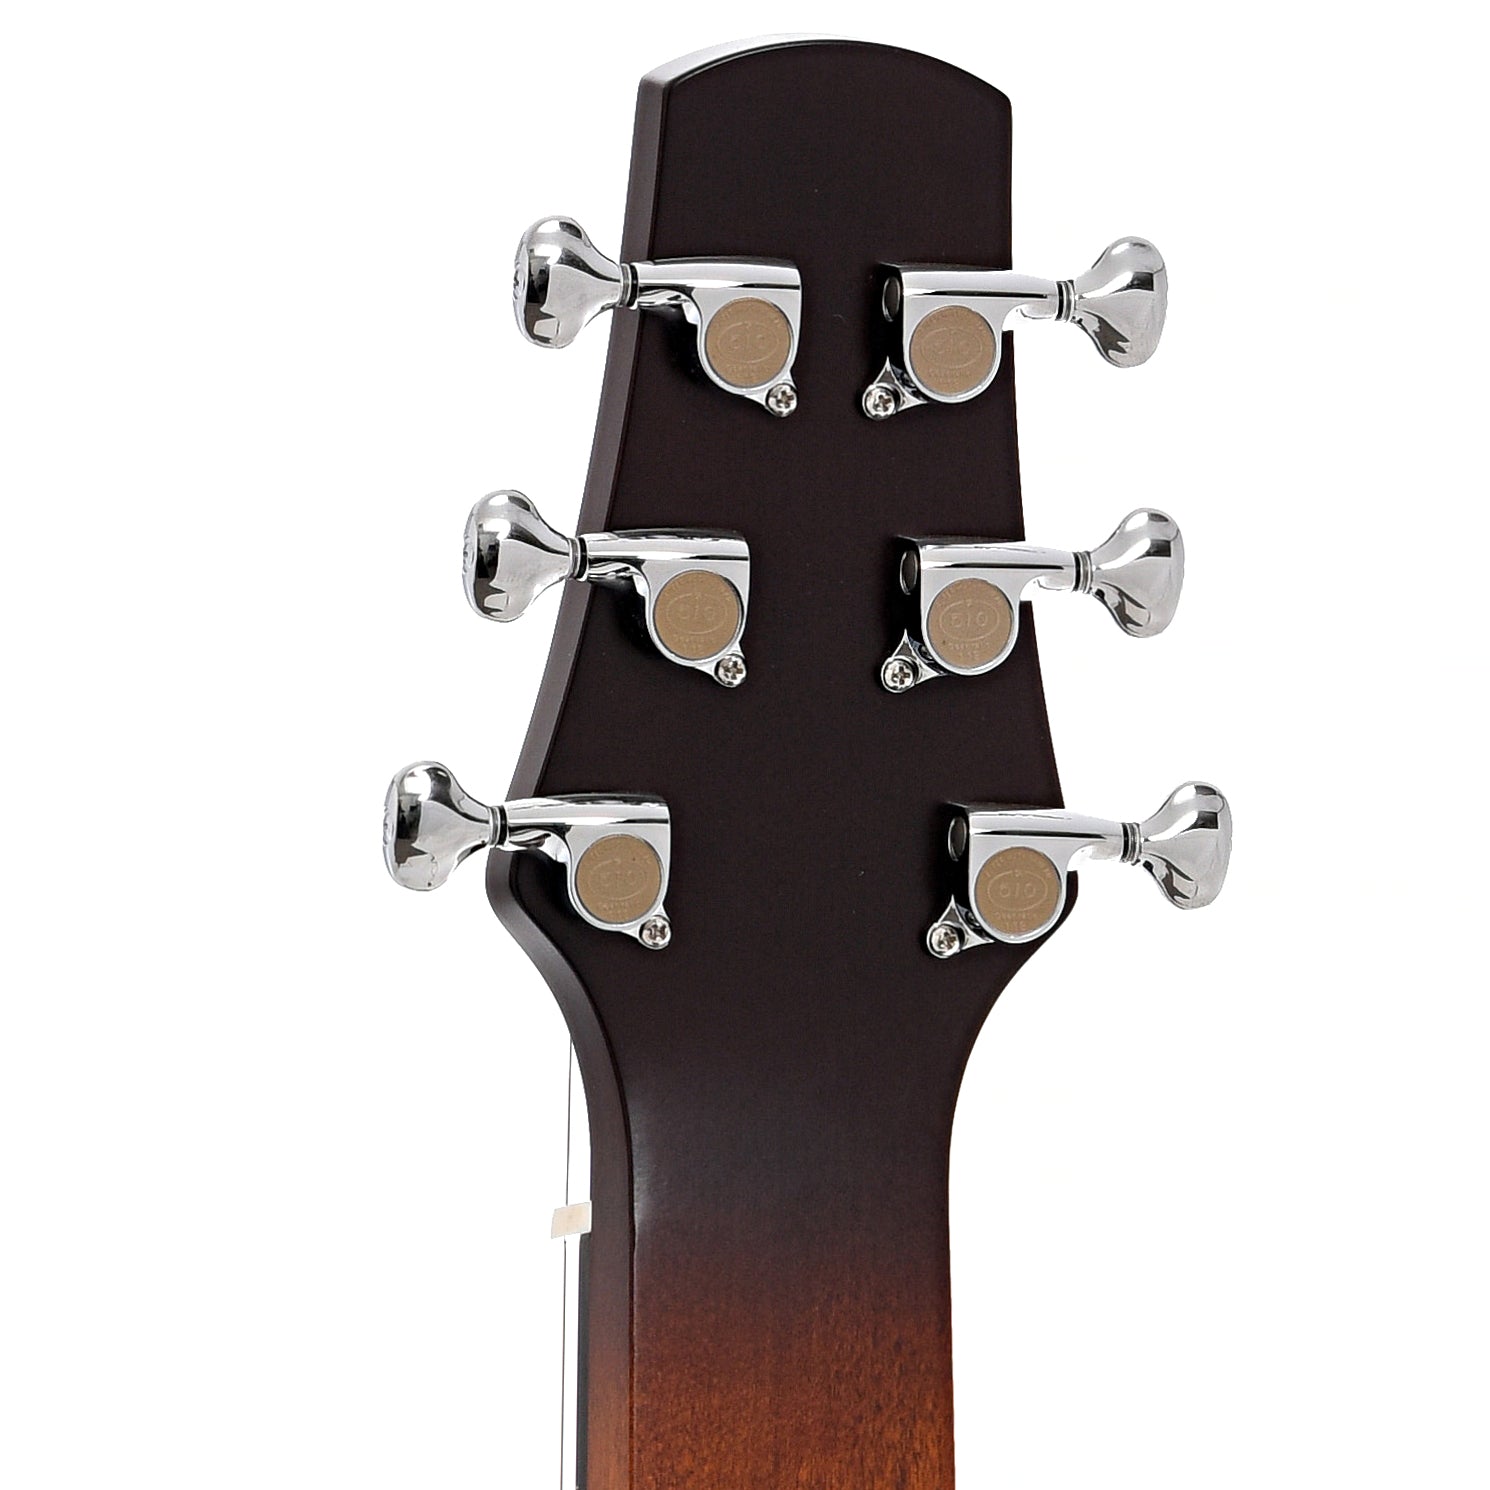 Back headstock of Beard Josh Swift Standard Squareneck Resonator Guitar with Signature Inlays